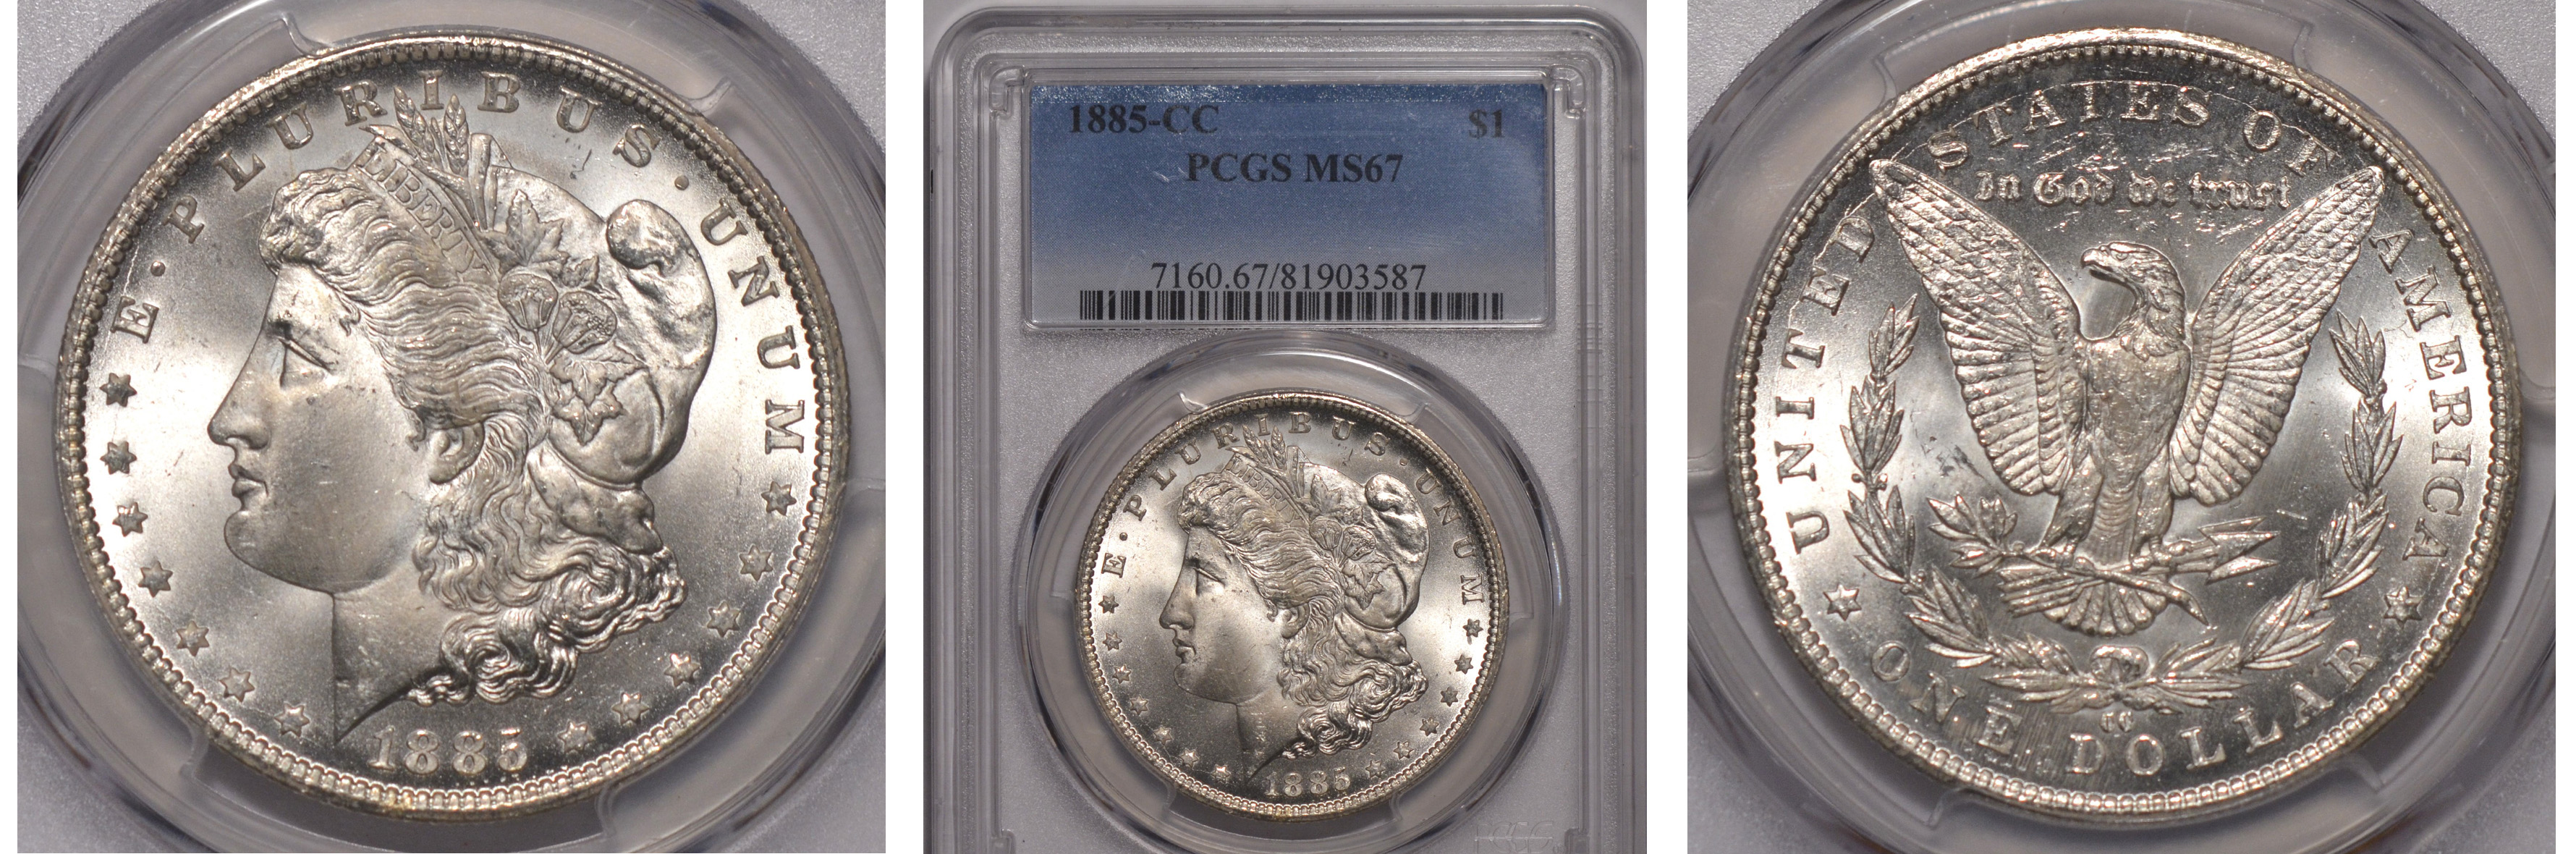 1885-cc Morgan Dollar PCGS MS67